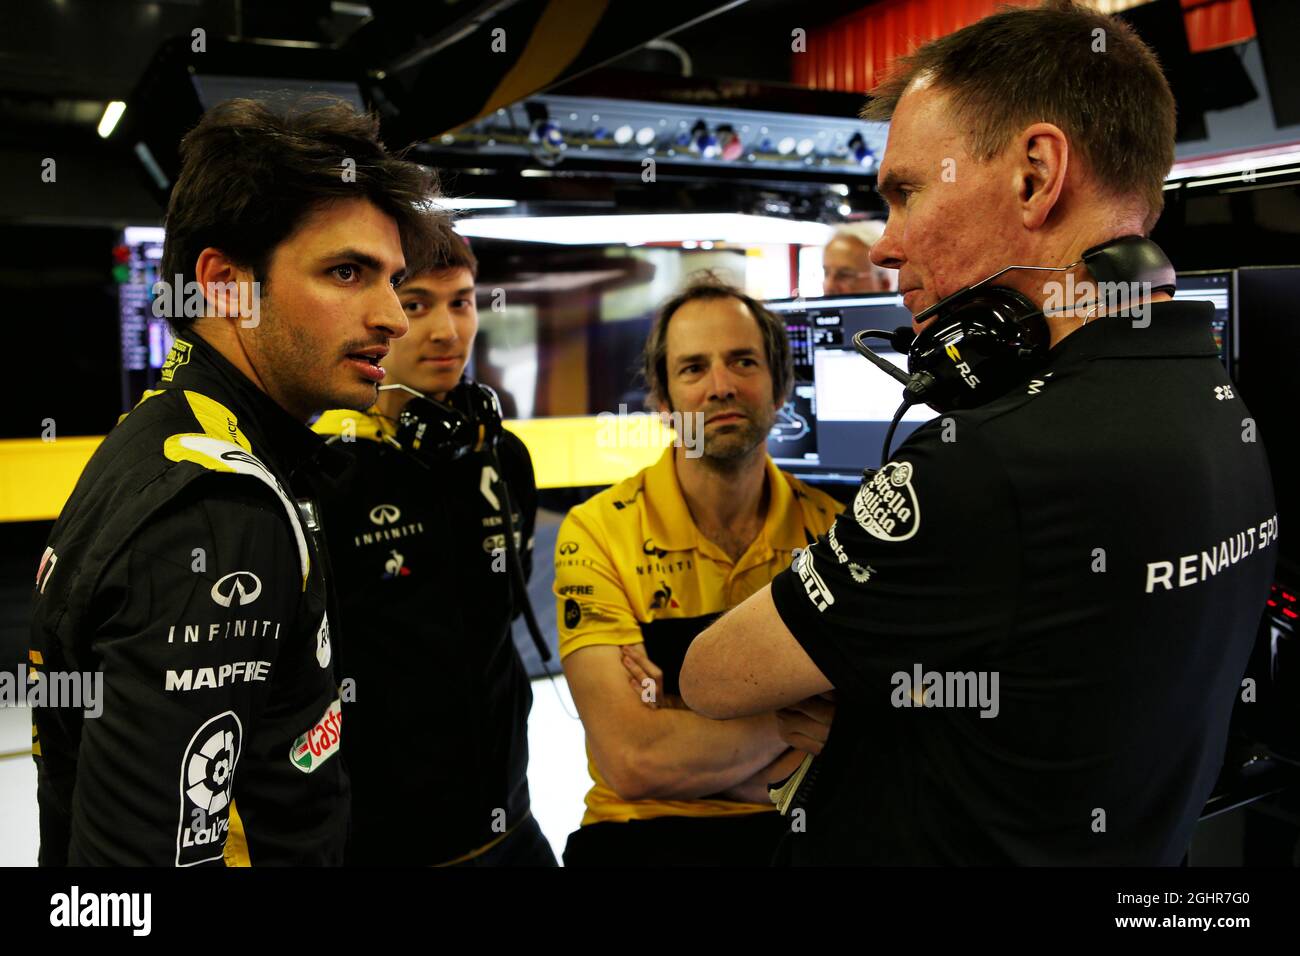 L a R): Carlos Sainz Jr (ESP) Renault Sport F1 Team con Jack Aitken (GBR) /  (KOR) Renault Sport F1 Team Test and Reserve Driver; Ciaron Pilbeam (GBR) Renault  Sport F1 Team